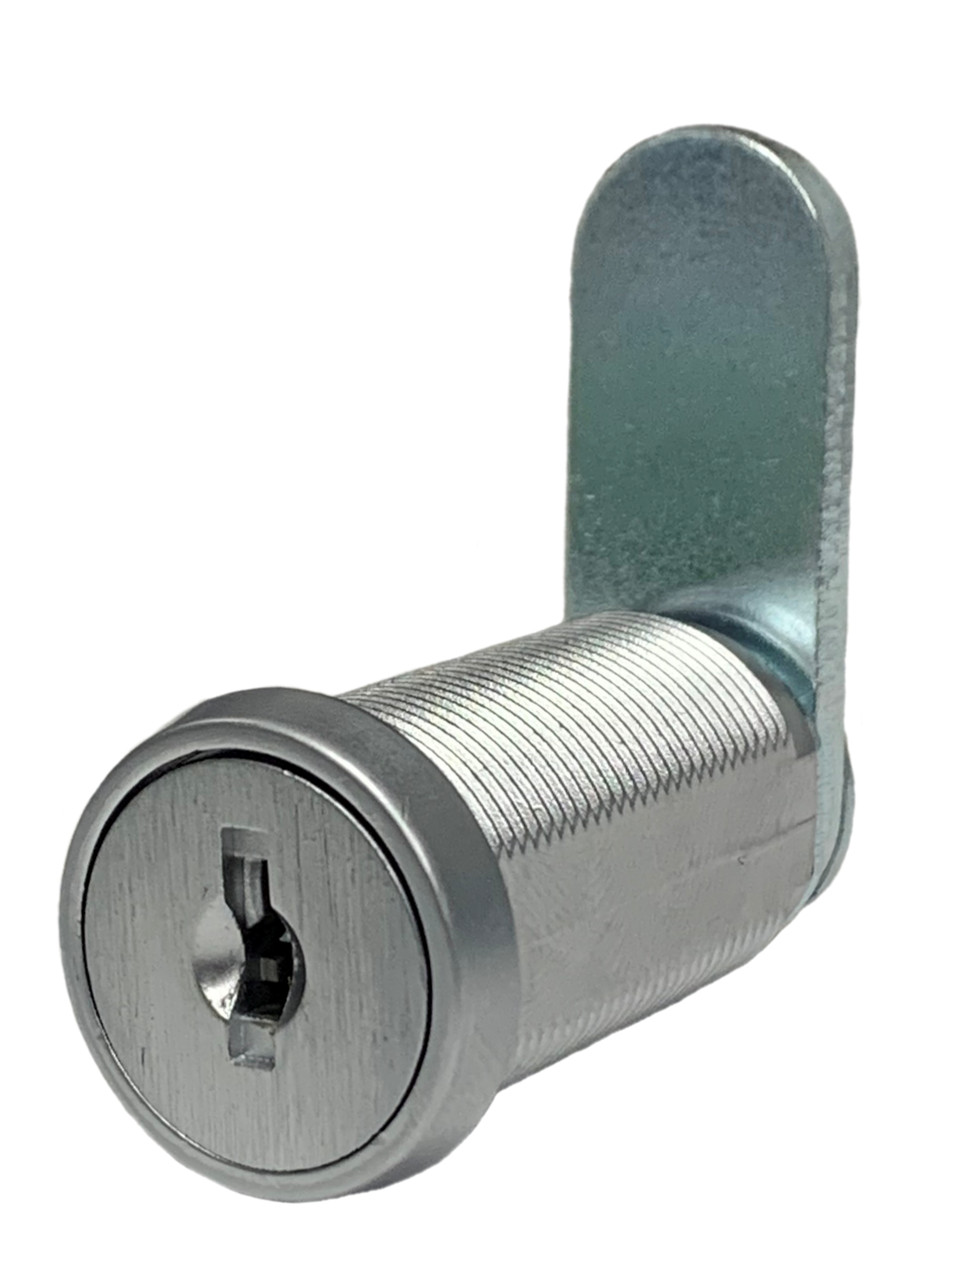 RealPlus Combination Cam Lock 1-1/8 Cylinder Coded Cabinet Lock Security  Locks